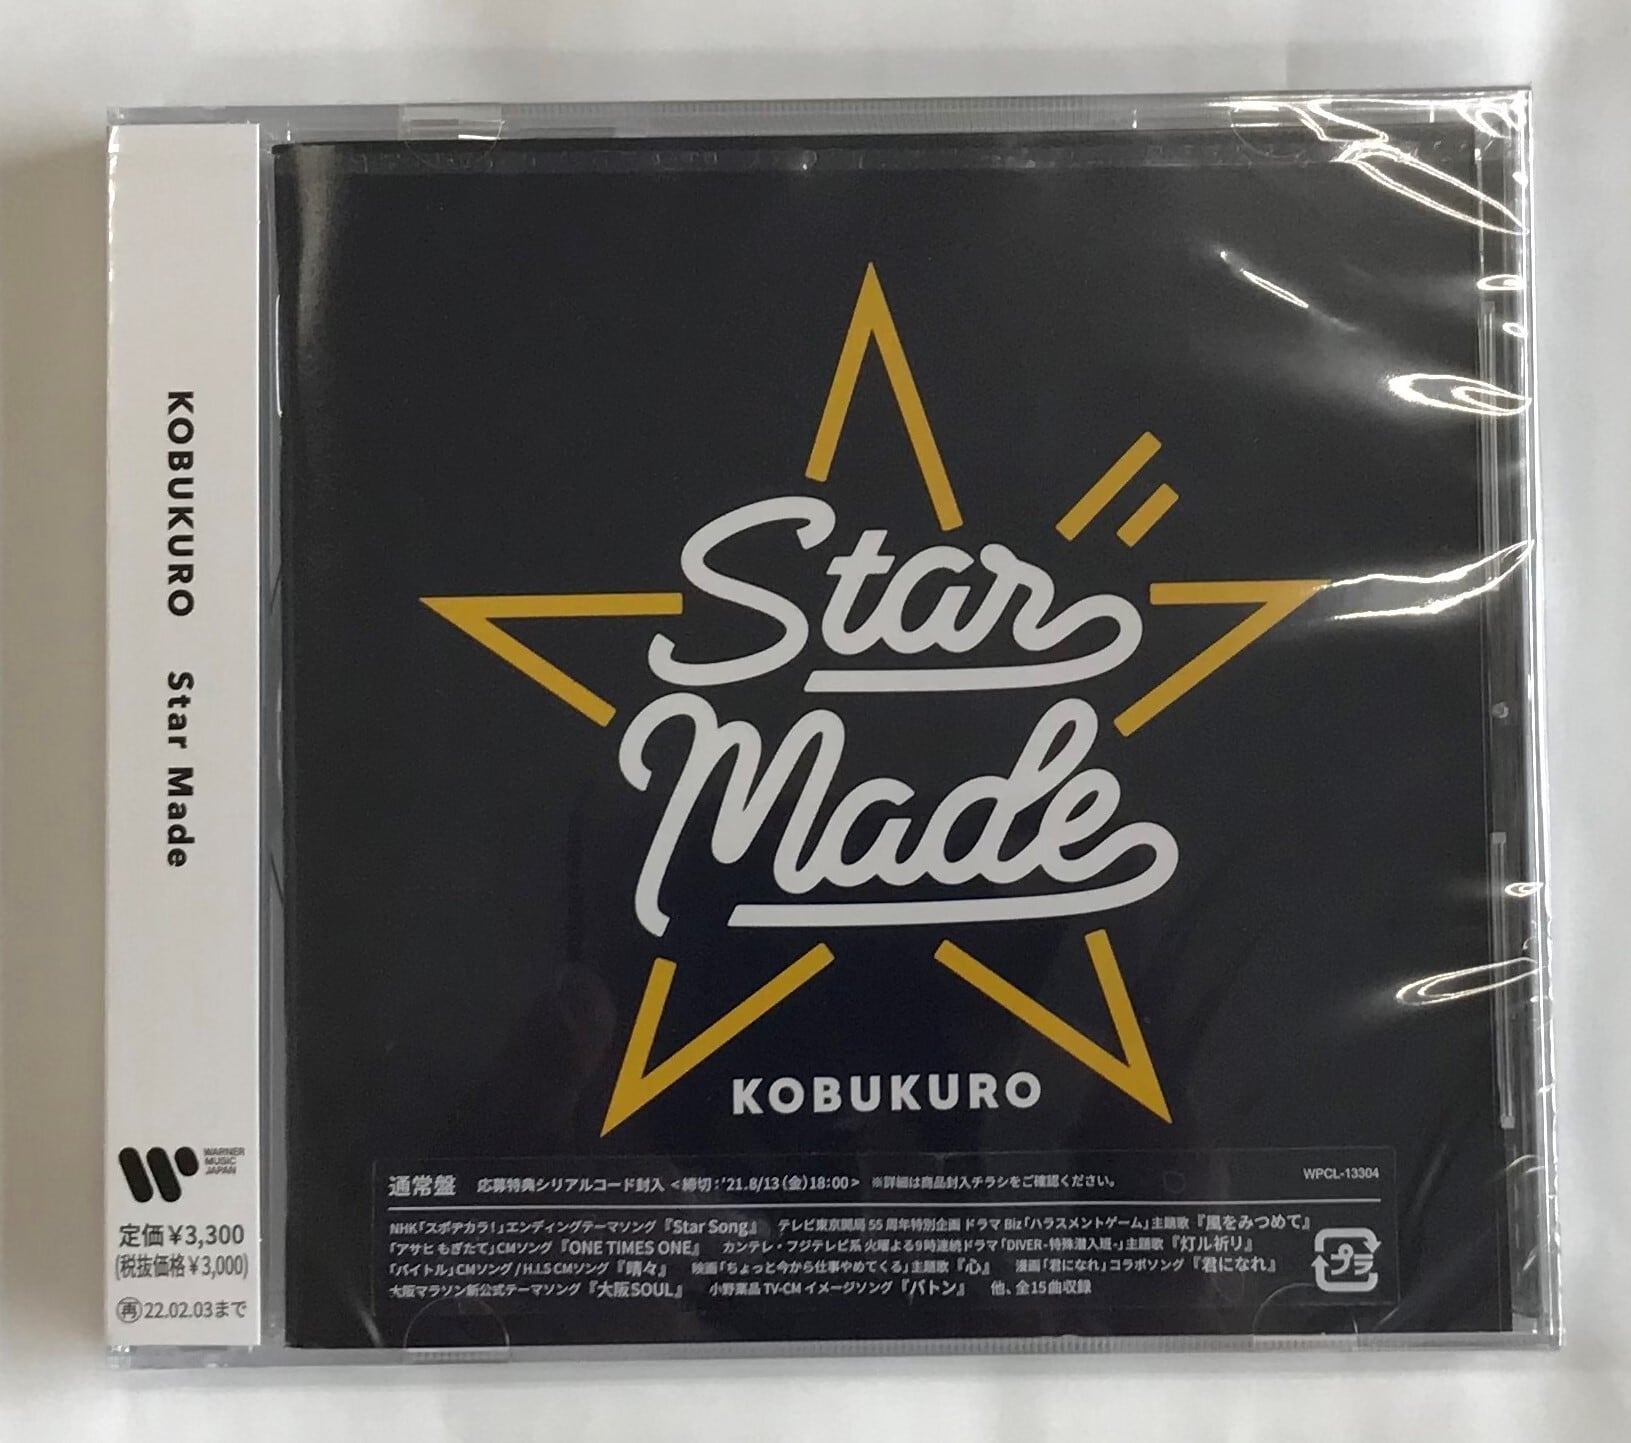 KOBUKURO Star Made